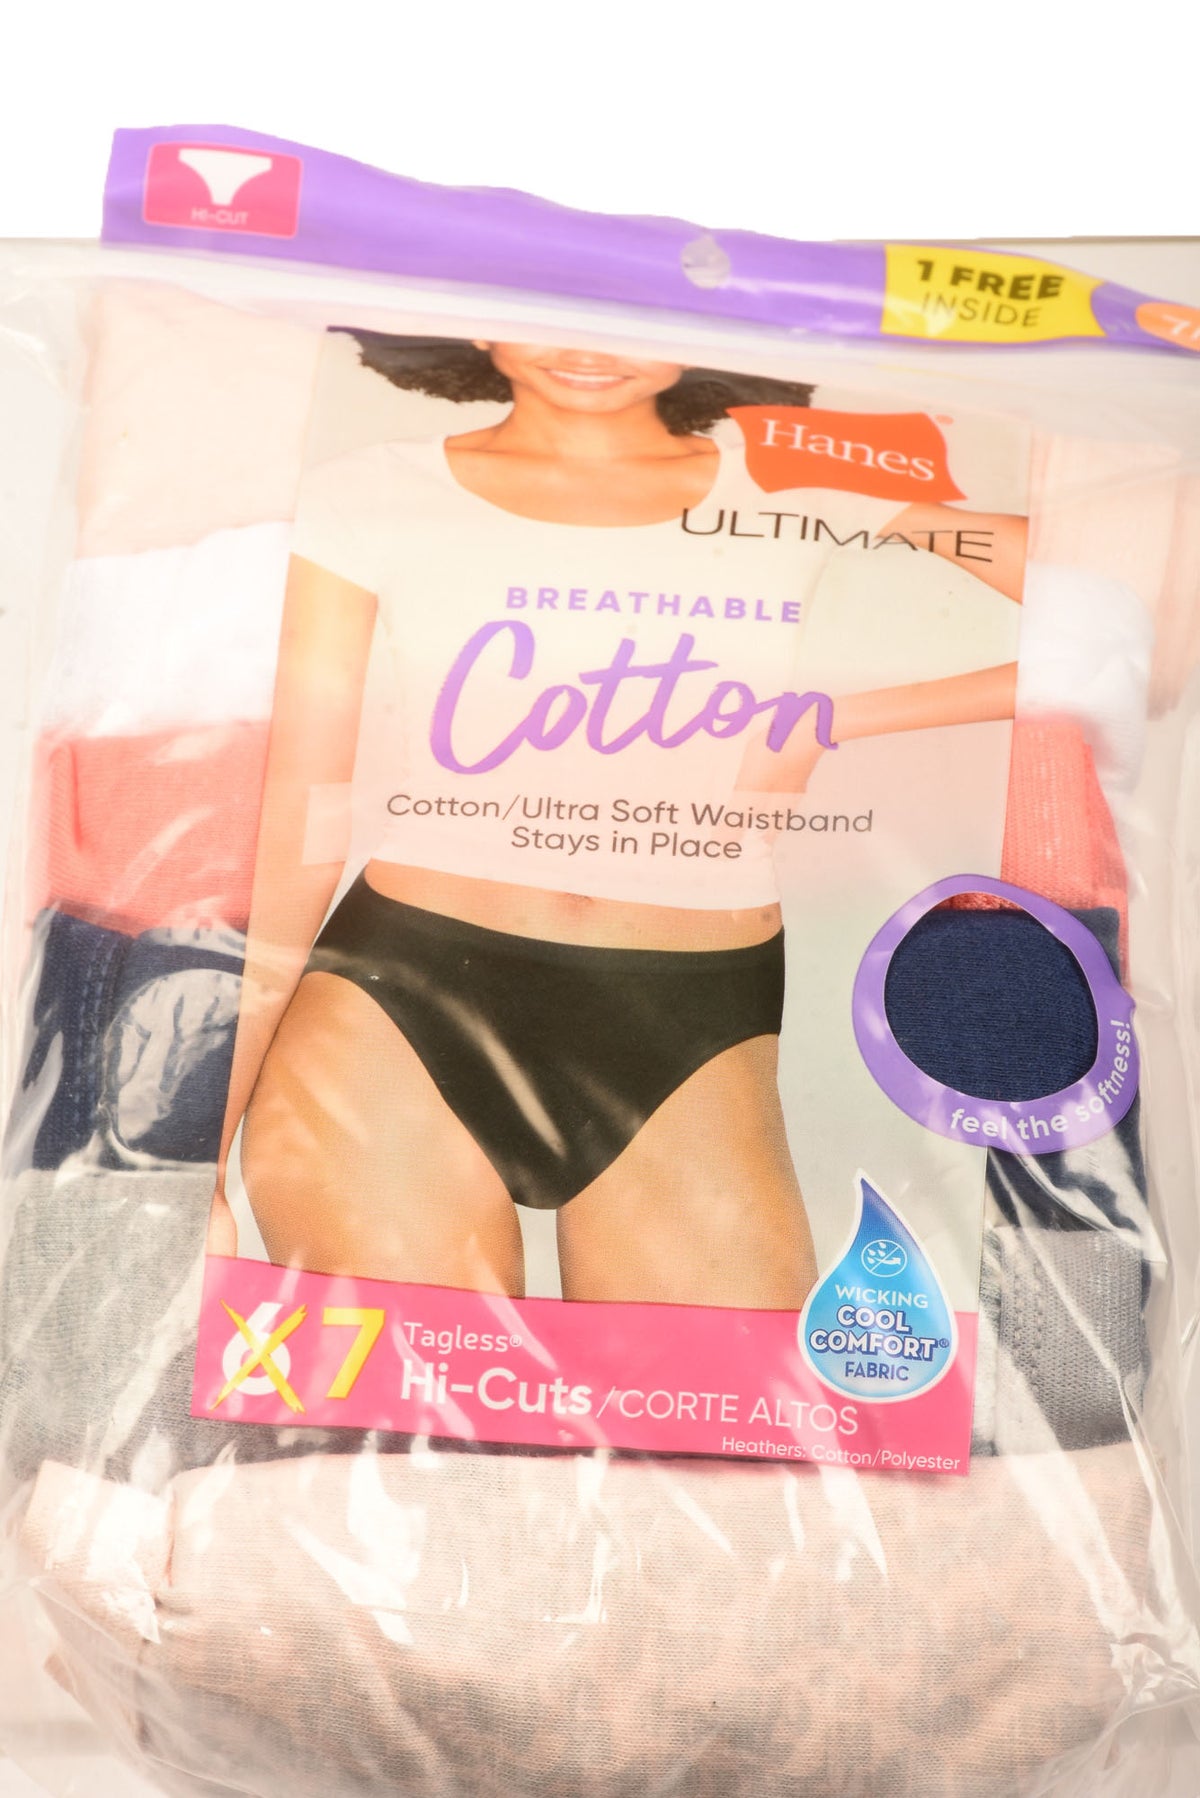 Free: PLUS SIZE Ladies Hanes Underwear Size 10 - Cotton Hi-Cuts